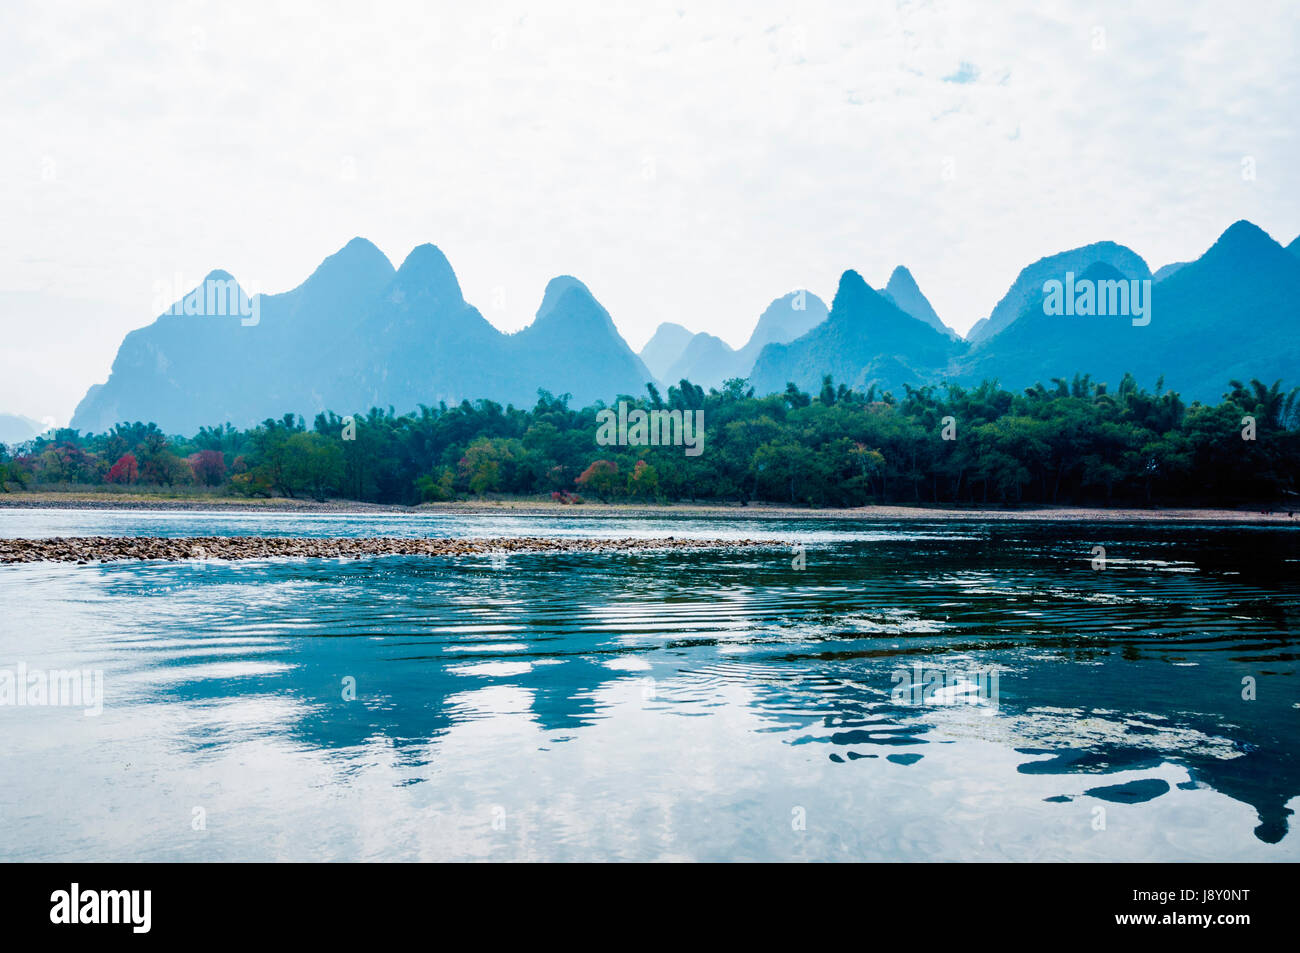 Li river and karst mountains landscape Stock Photo